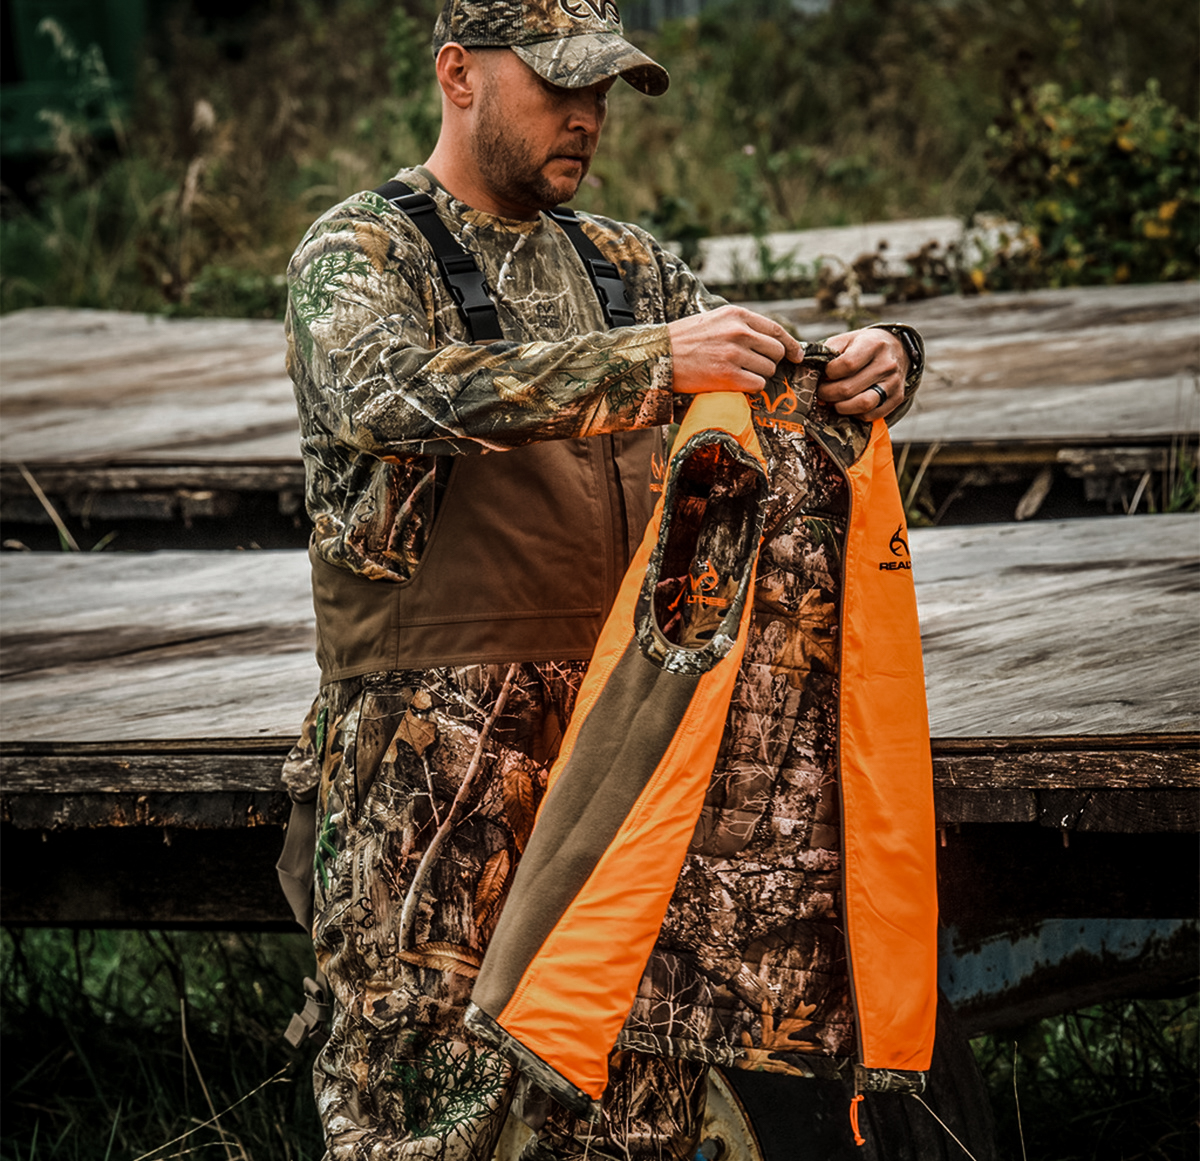 Reversible orange hunting vest from realtree